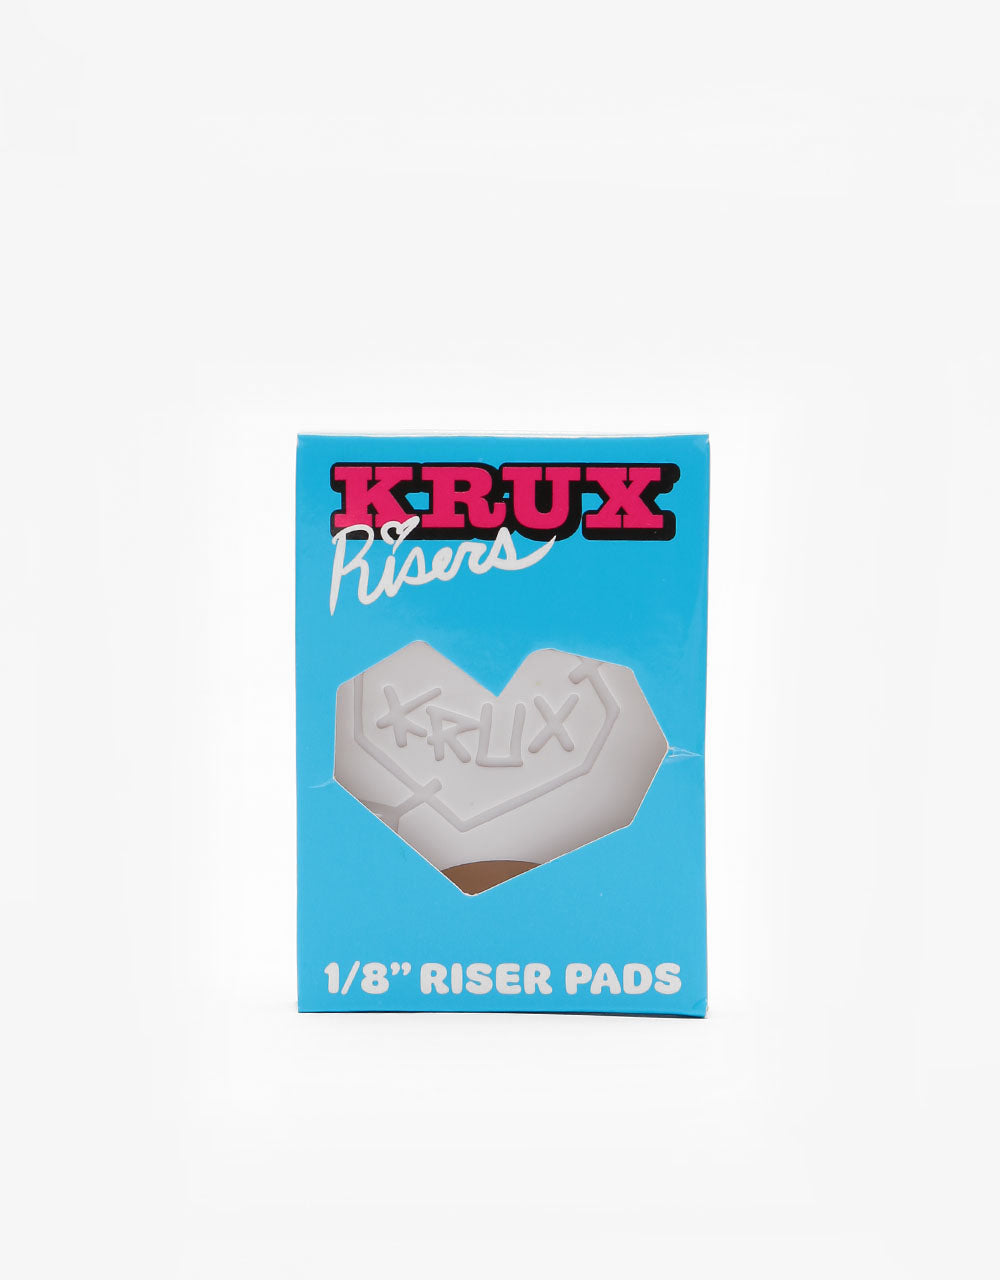 Krux 1/8" Riser Pads